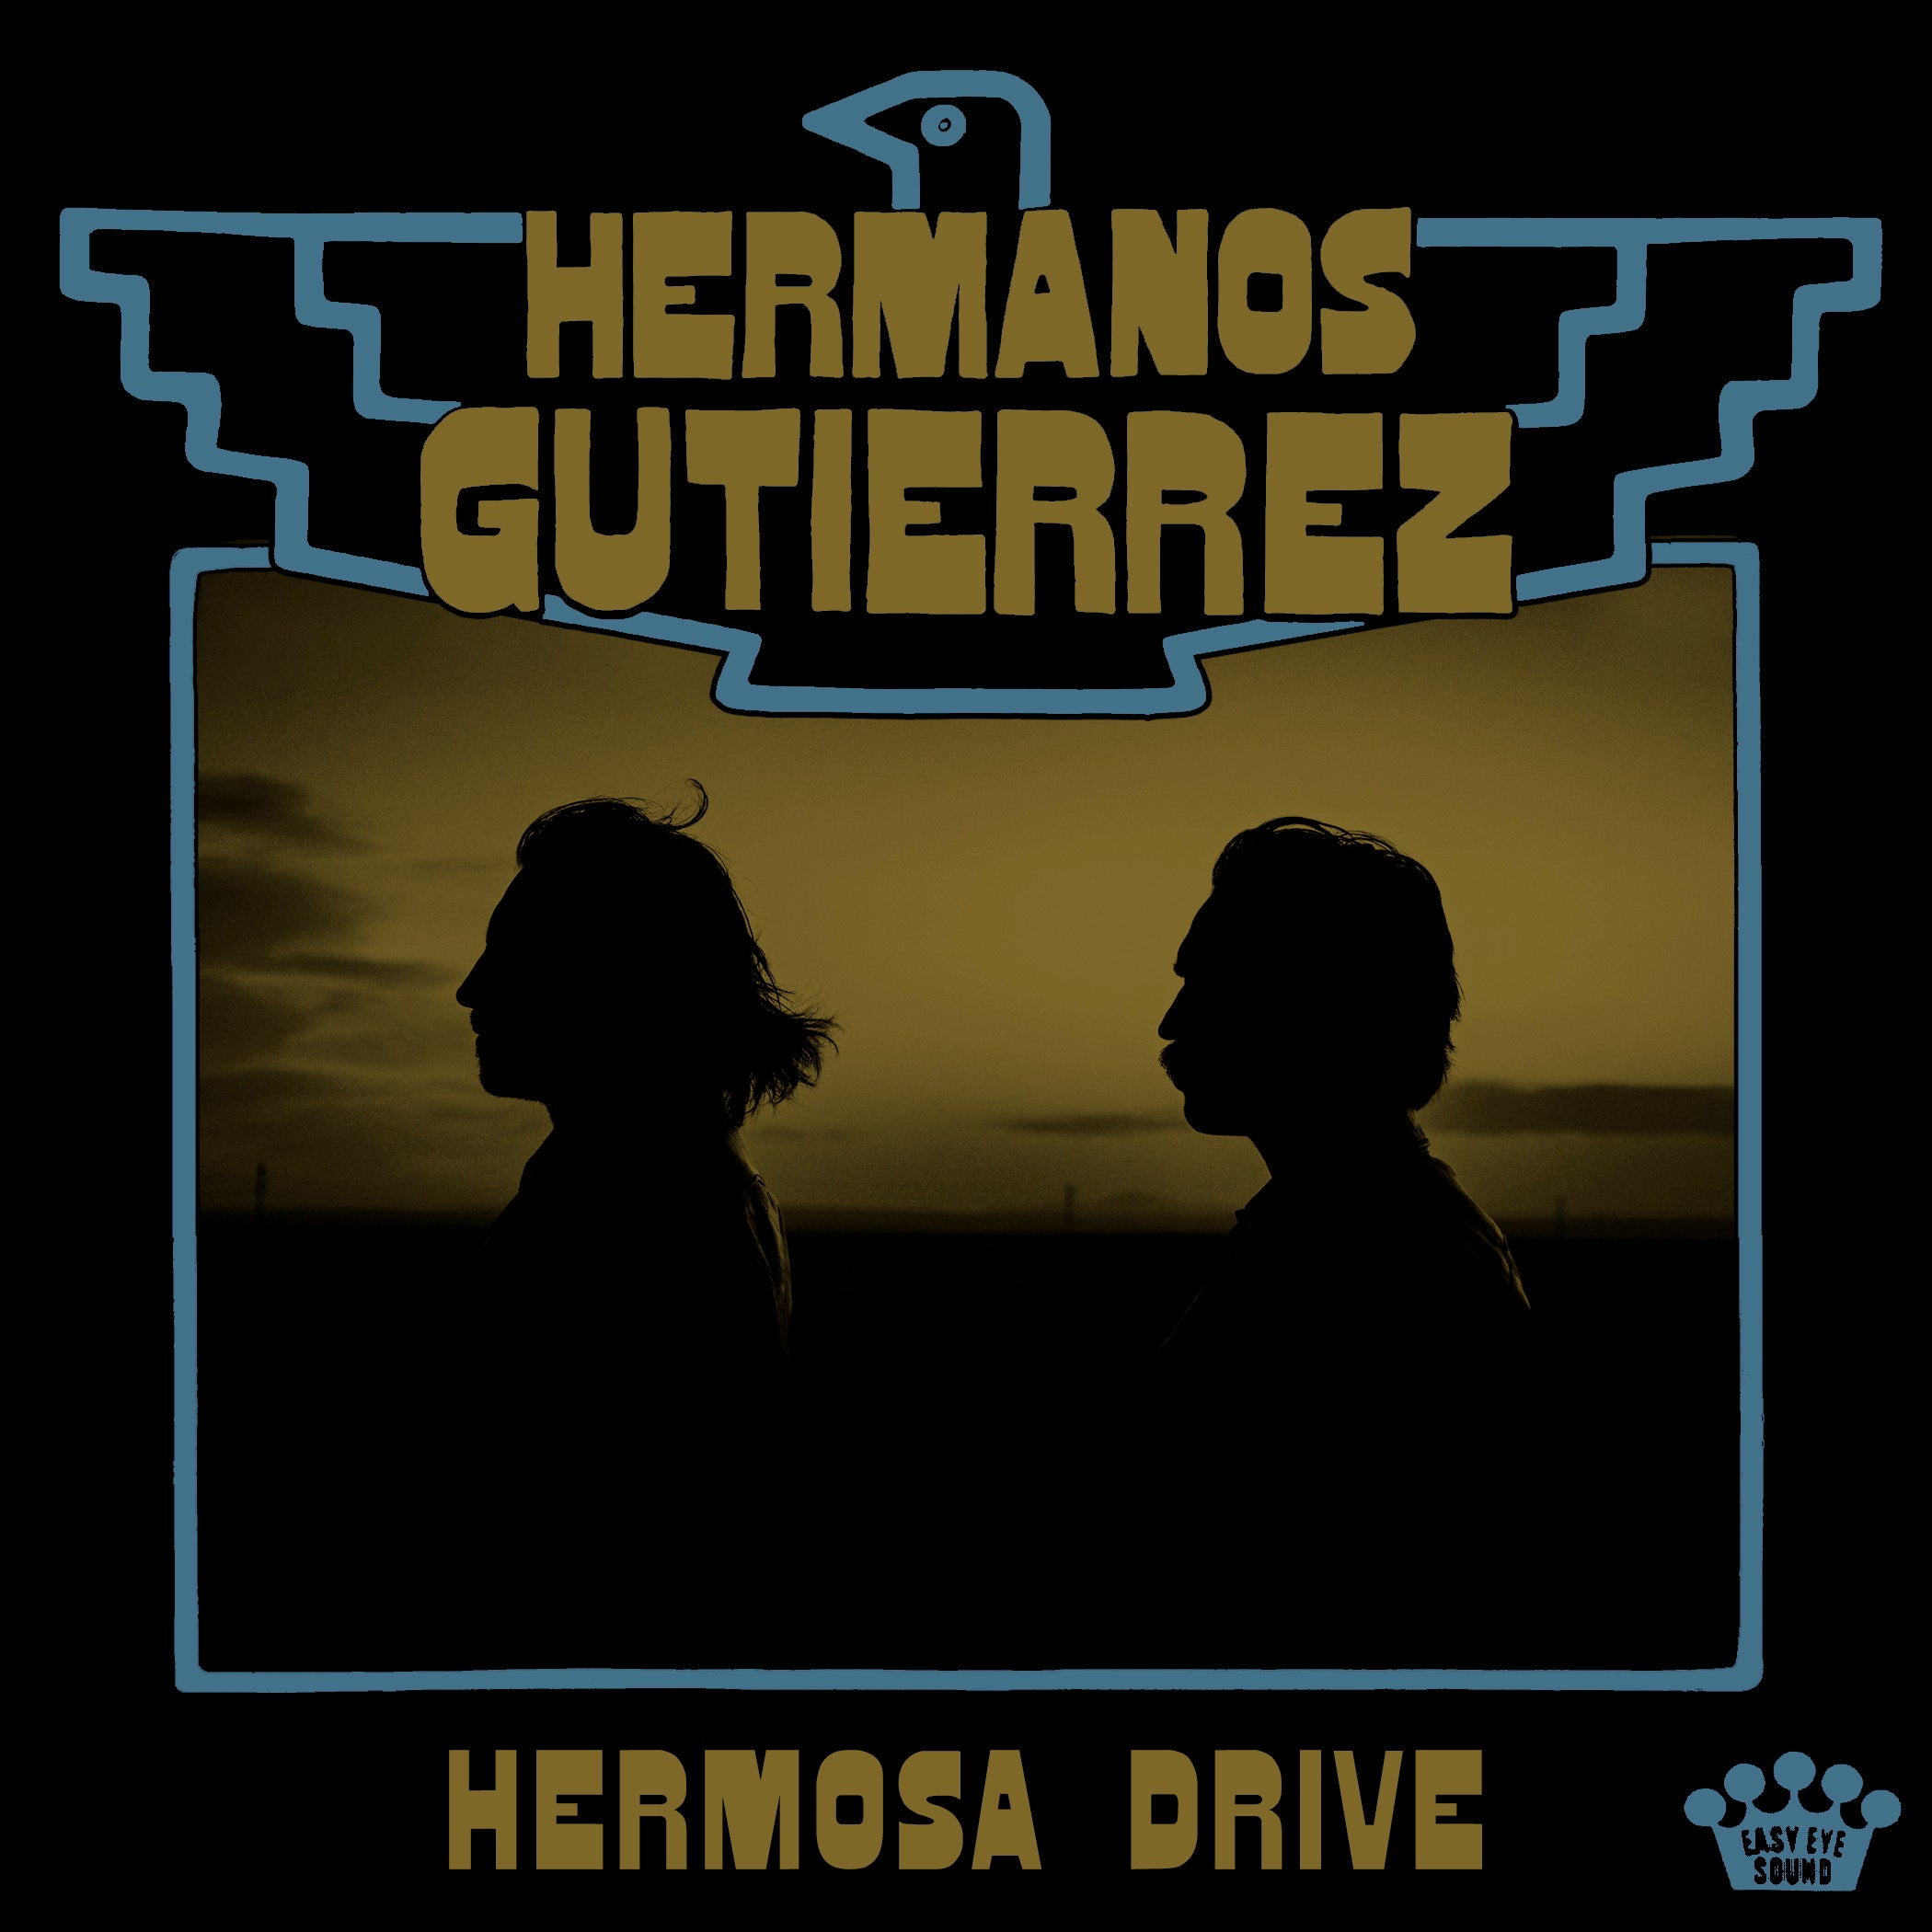 NEW SINGLE, “HERMOSA DRIVE,” BY HERMANOS GUTIÉRREZ